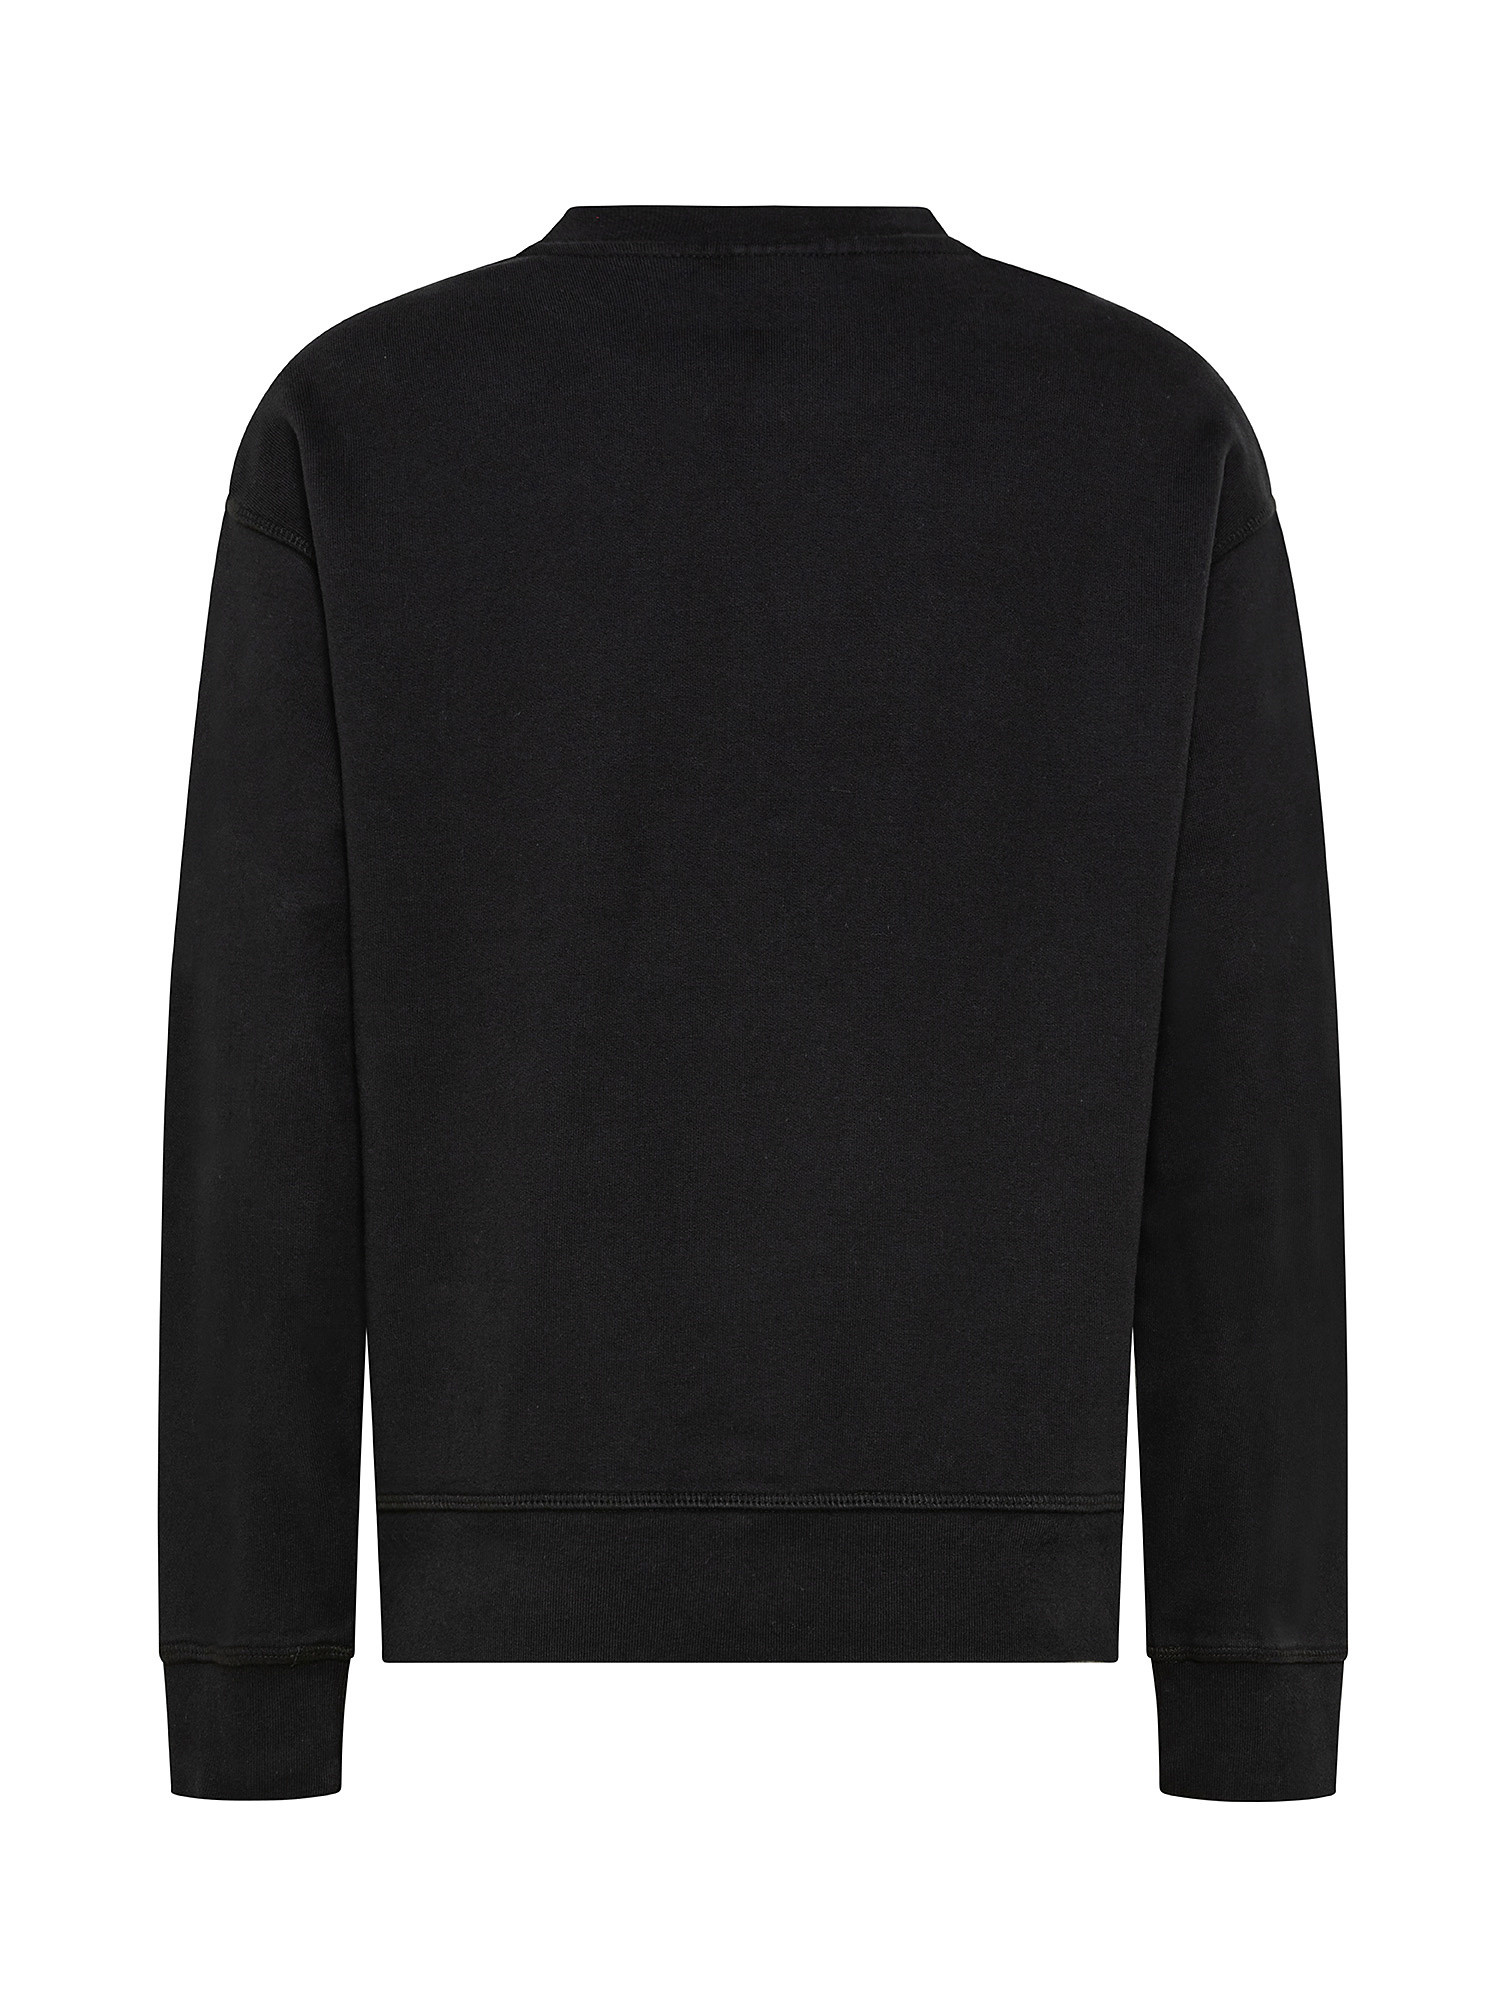 Crewneck sweatshirt, Black, large image number 1